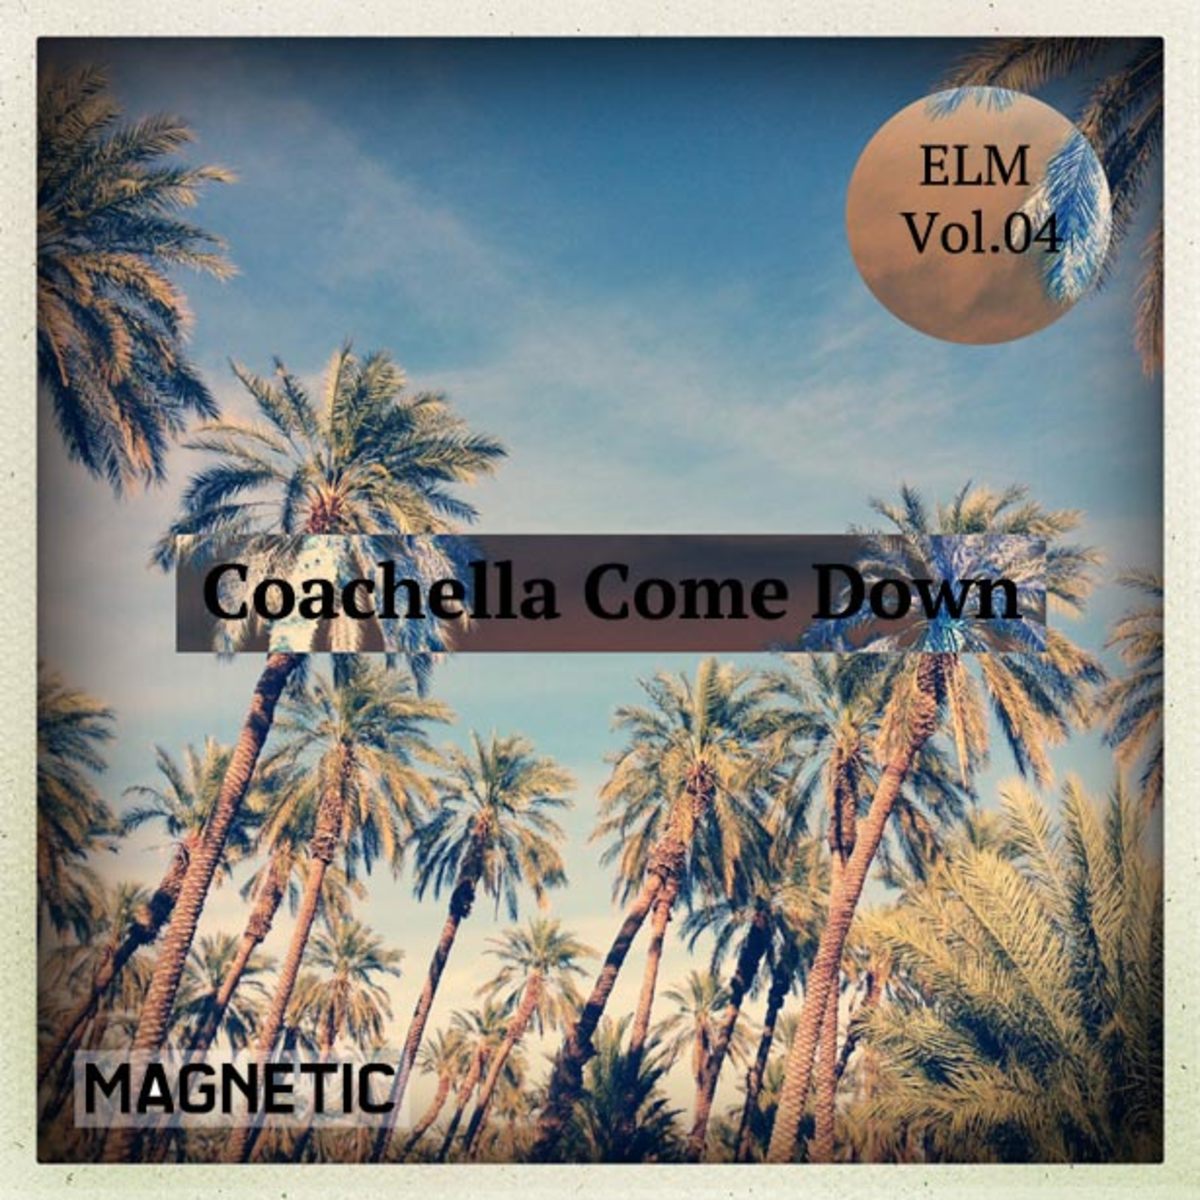 Exclusive Download: ELM Vol. 4 "Coachella Come Down"